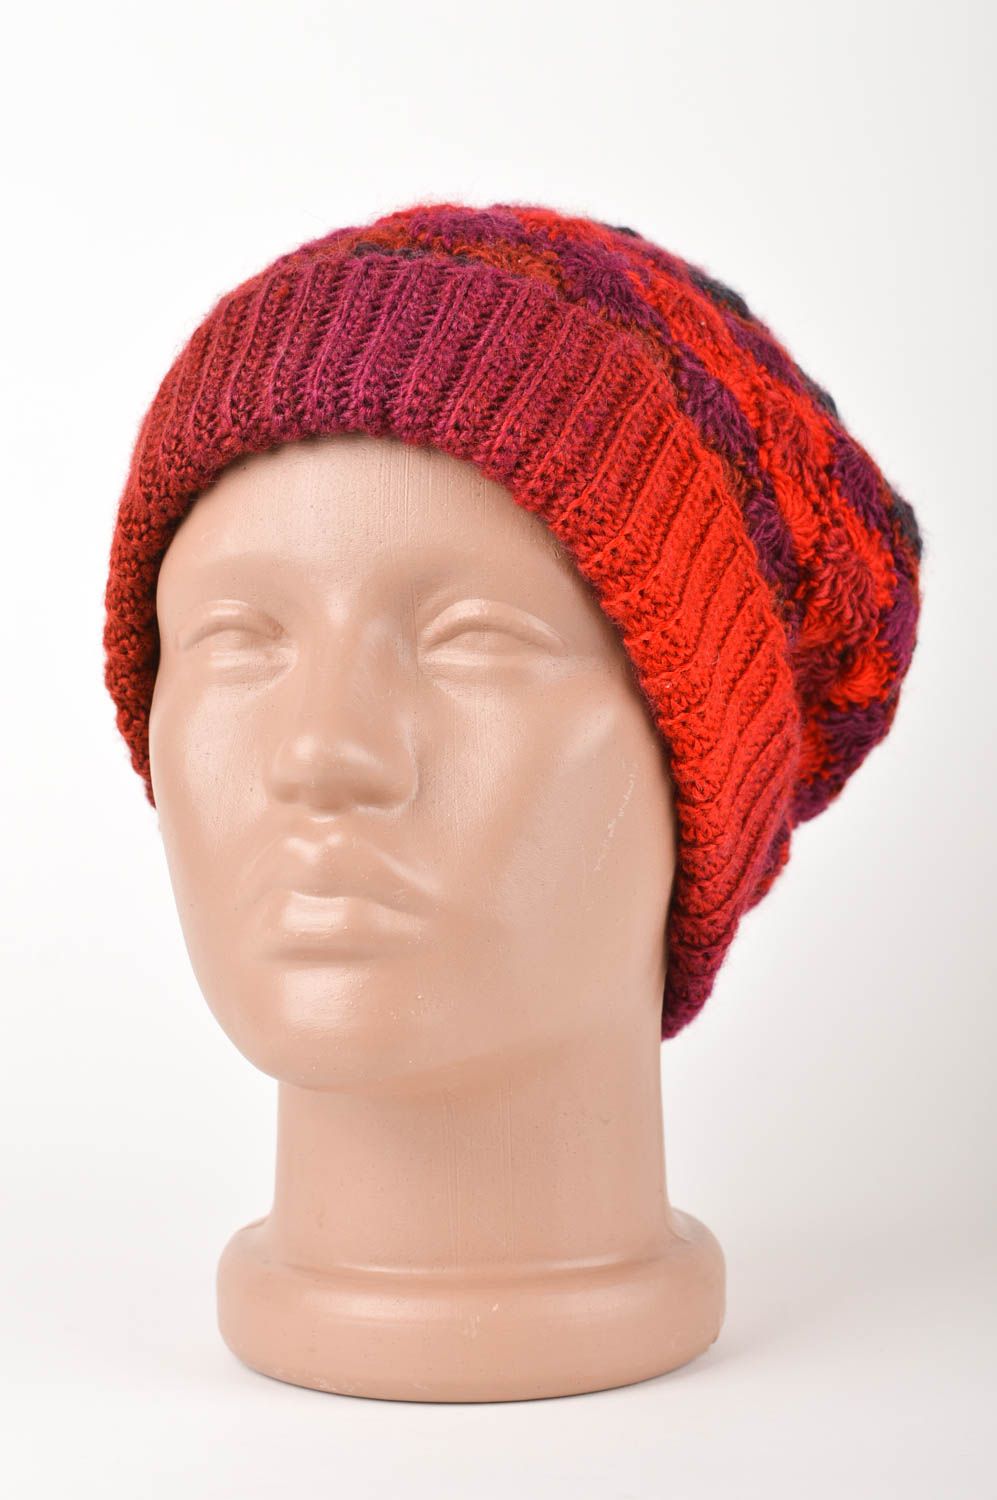 Handmade winter cap stylish warm headwear unusual colorful cap woolen hat photo 1